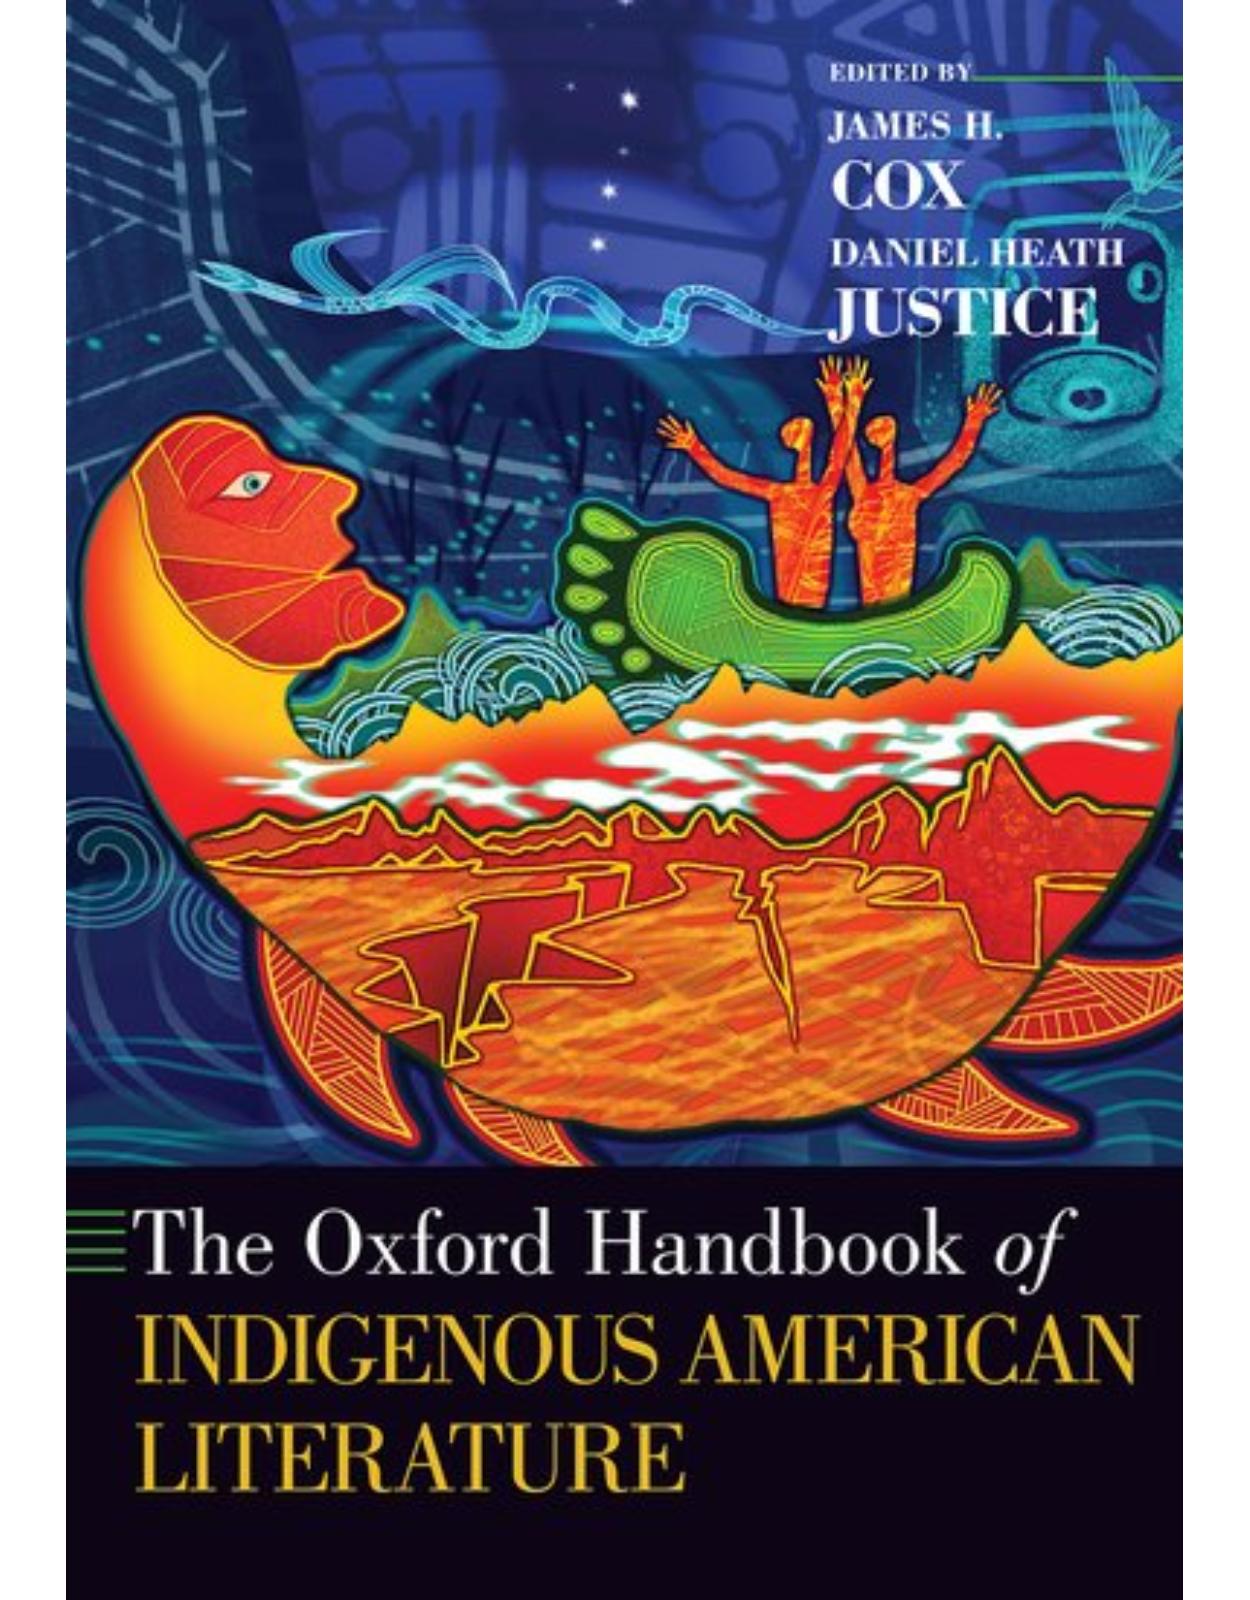 The Oxford Handbook of Indigenous American Literature